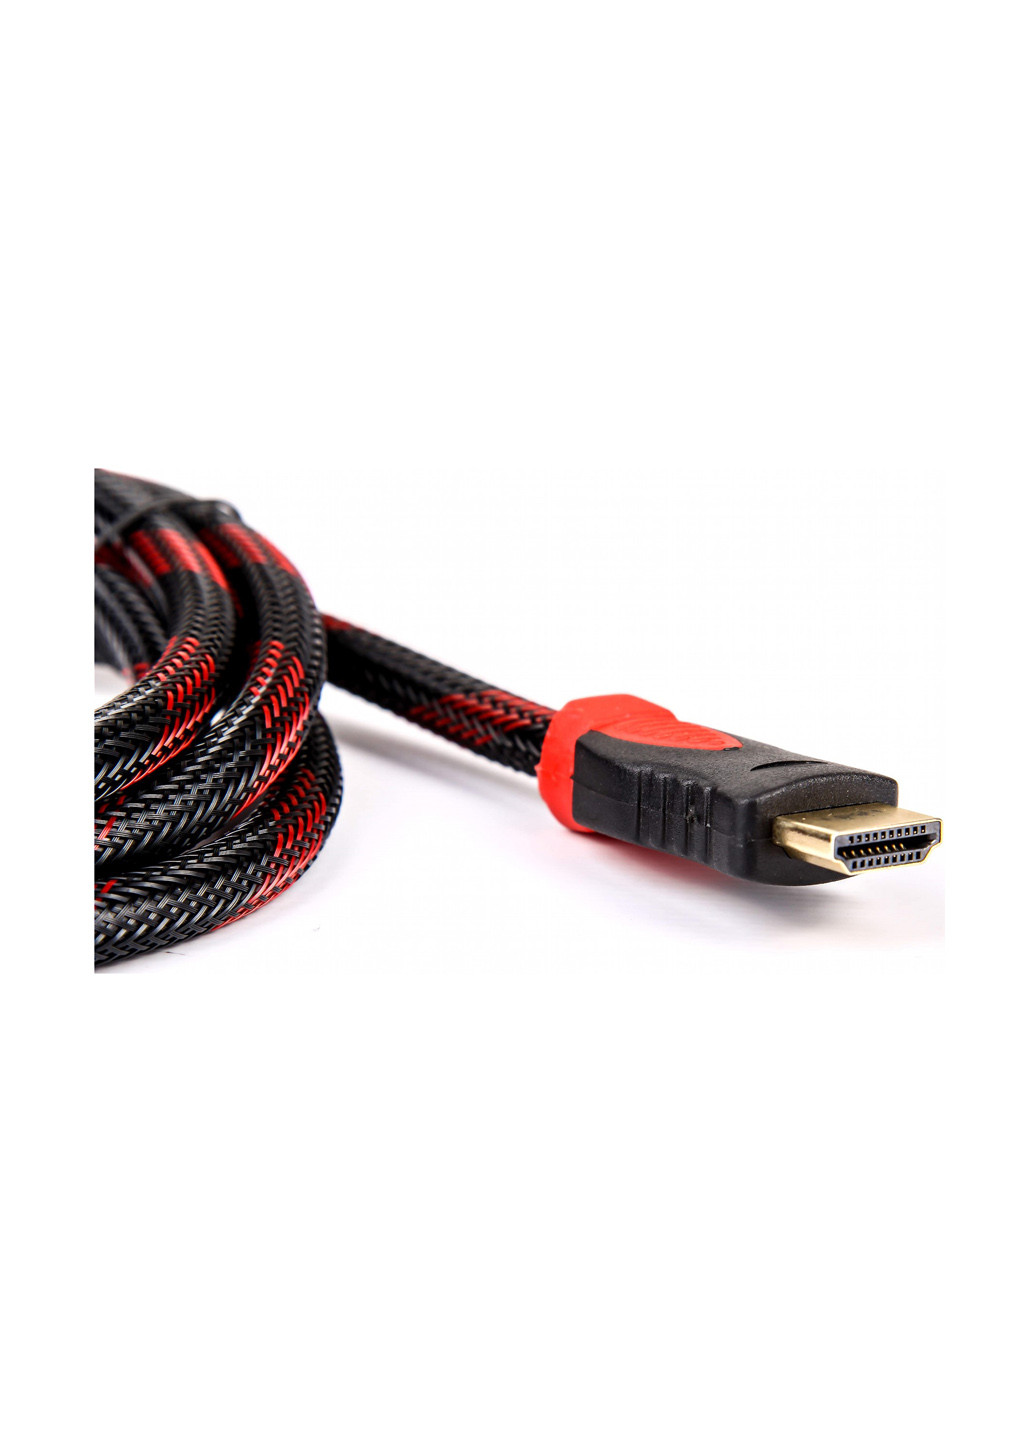 Кабель HDMI - 3 RCA (компонент RGB), 1,8 м (70018) CHARMOUNT кабель charmount hdmi - 3 rca (компонент rgb), 1,8 м (70018) (145607399)